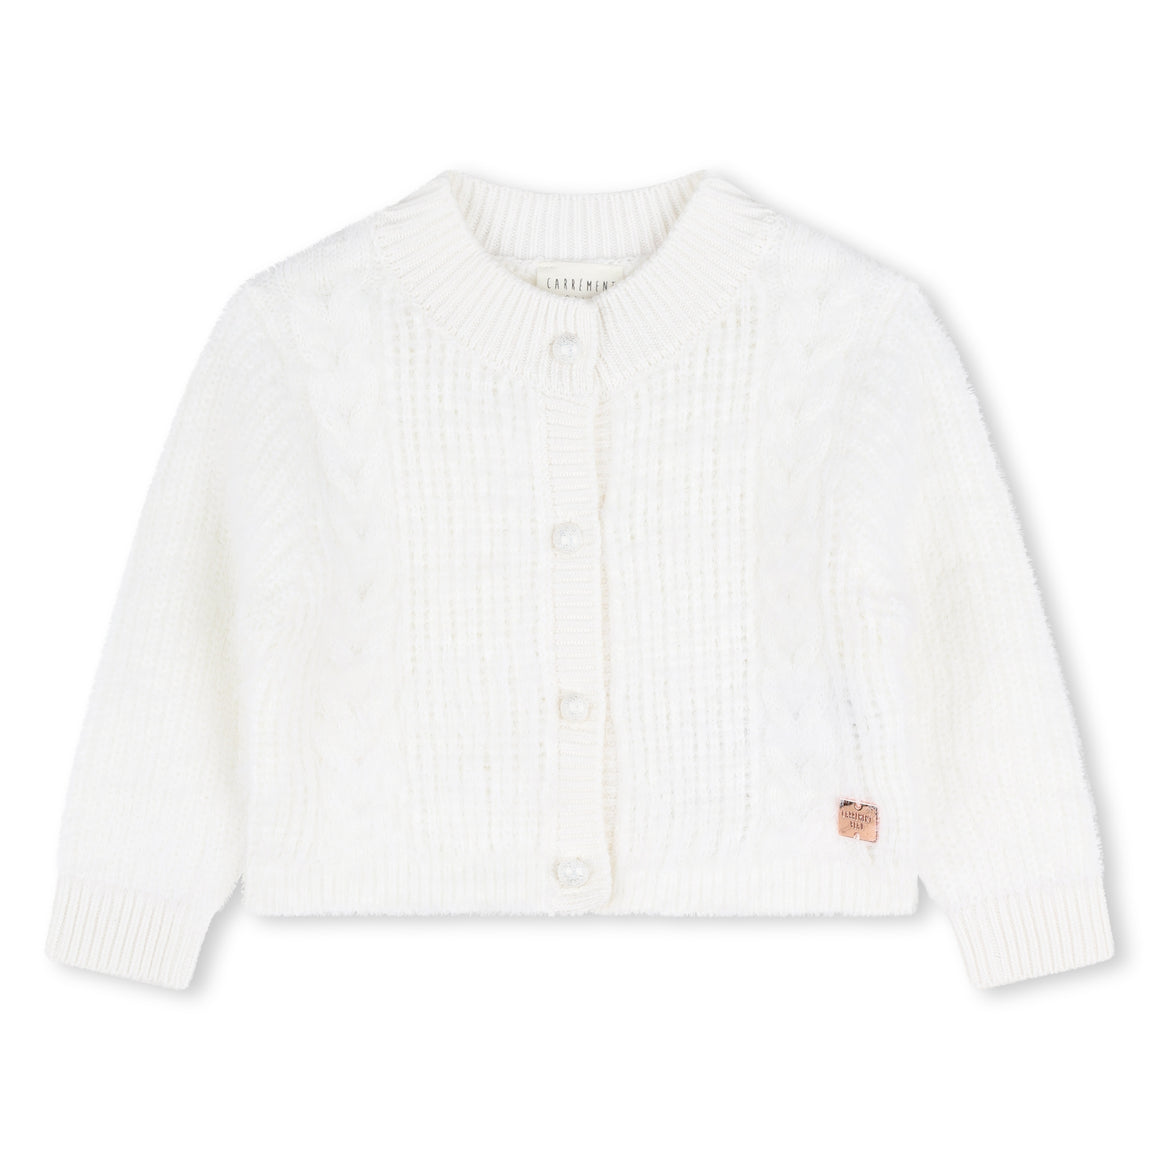 Carrement Beau White Knitted Cardigan | Sweaters & Knitwear | Bon Bon Tresor